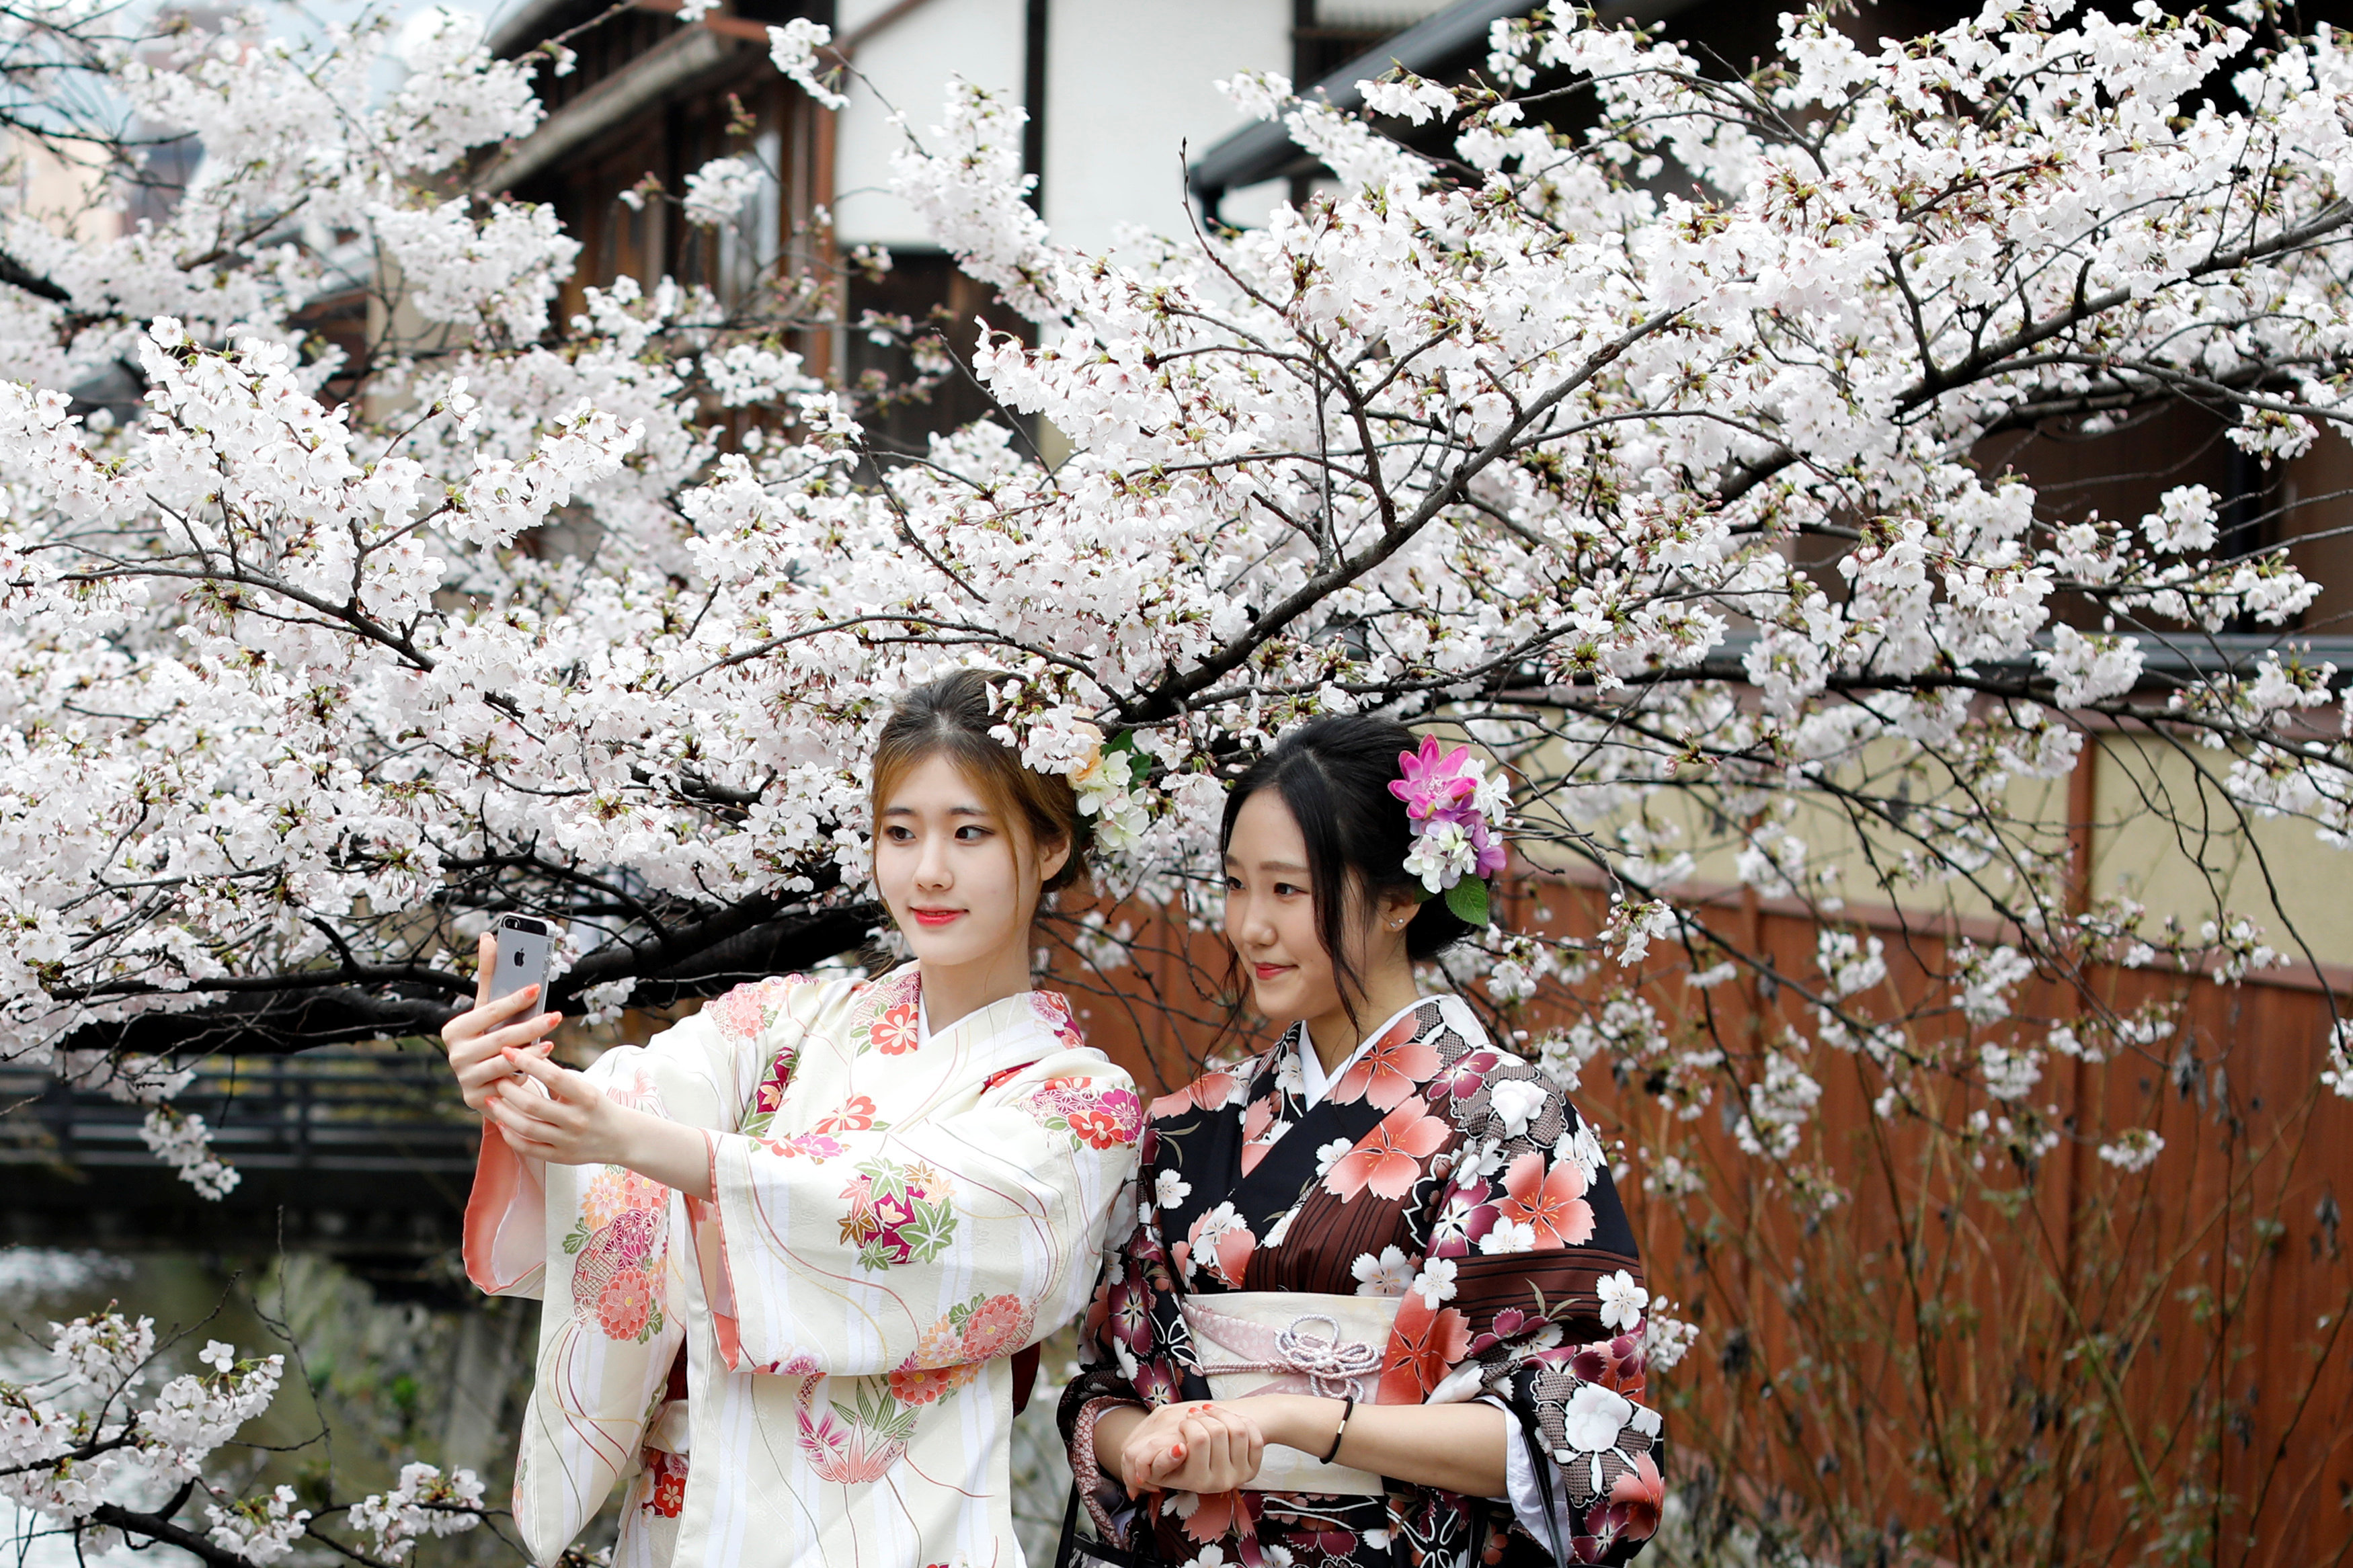 Сакура в кимоно